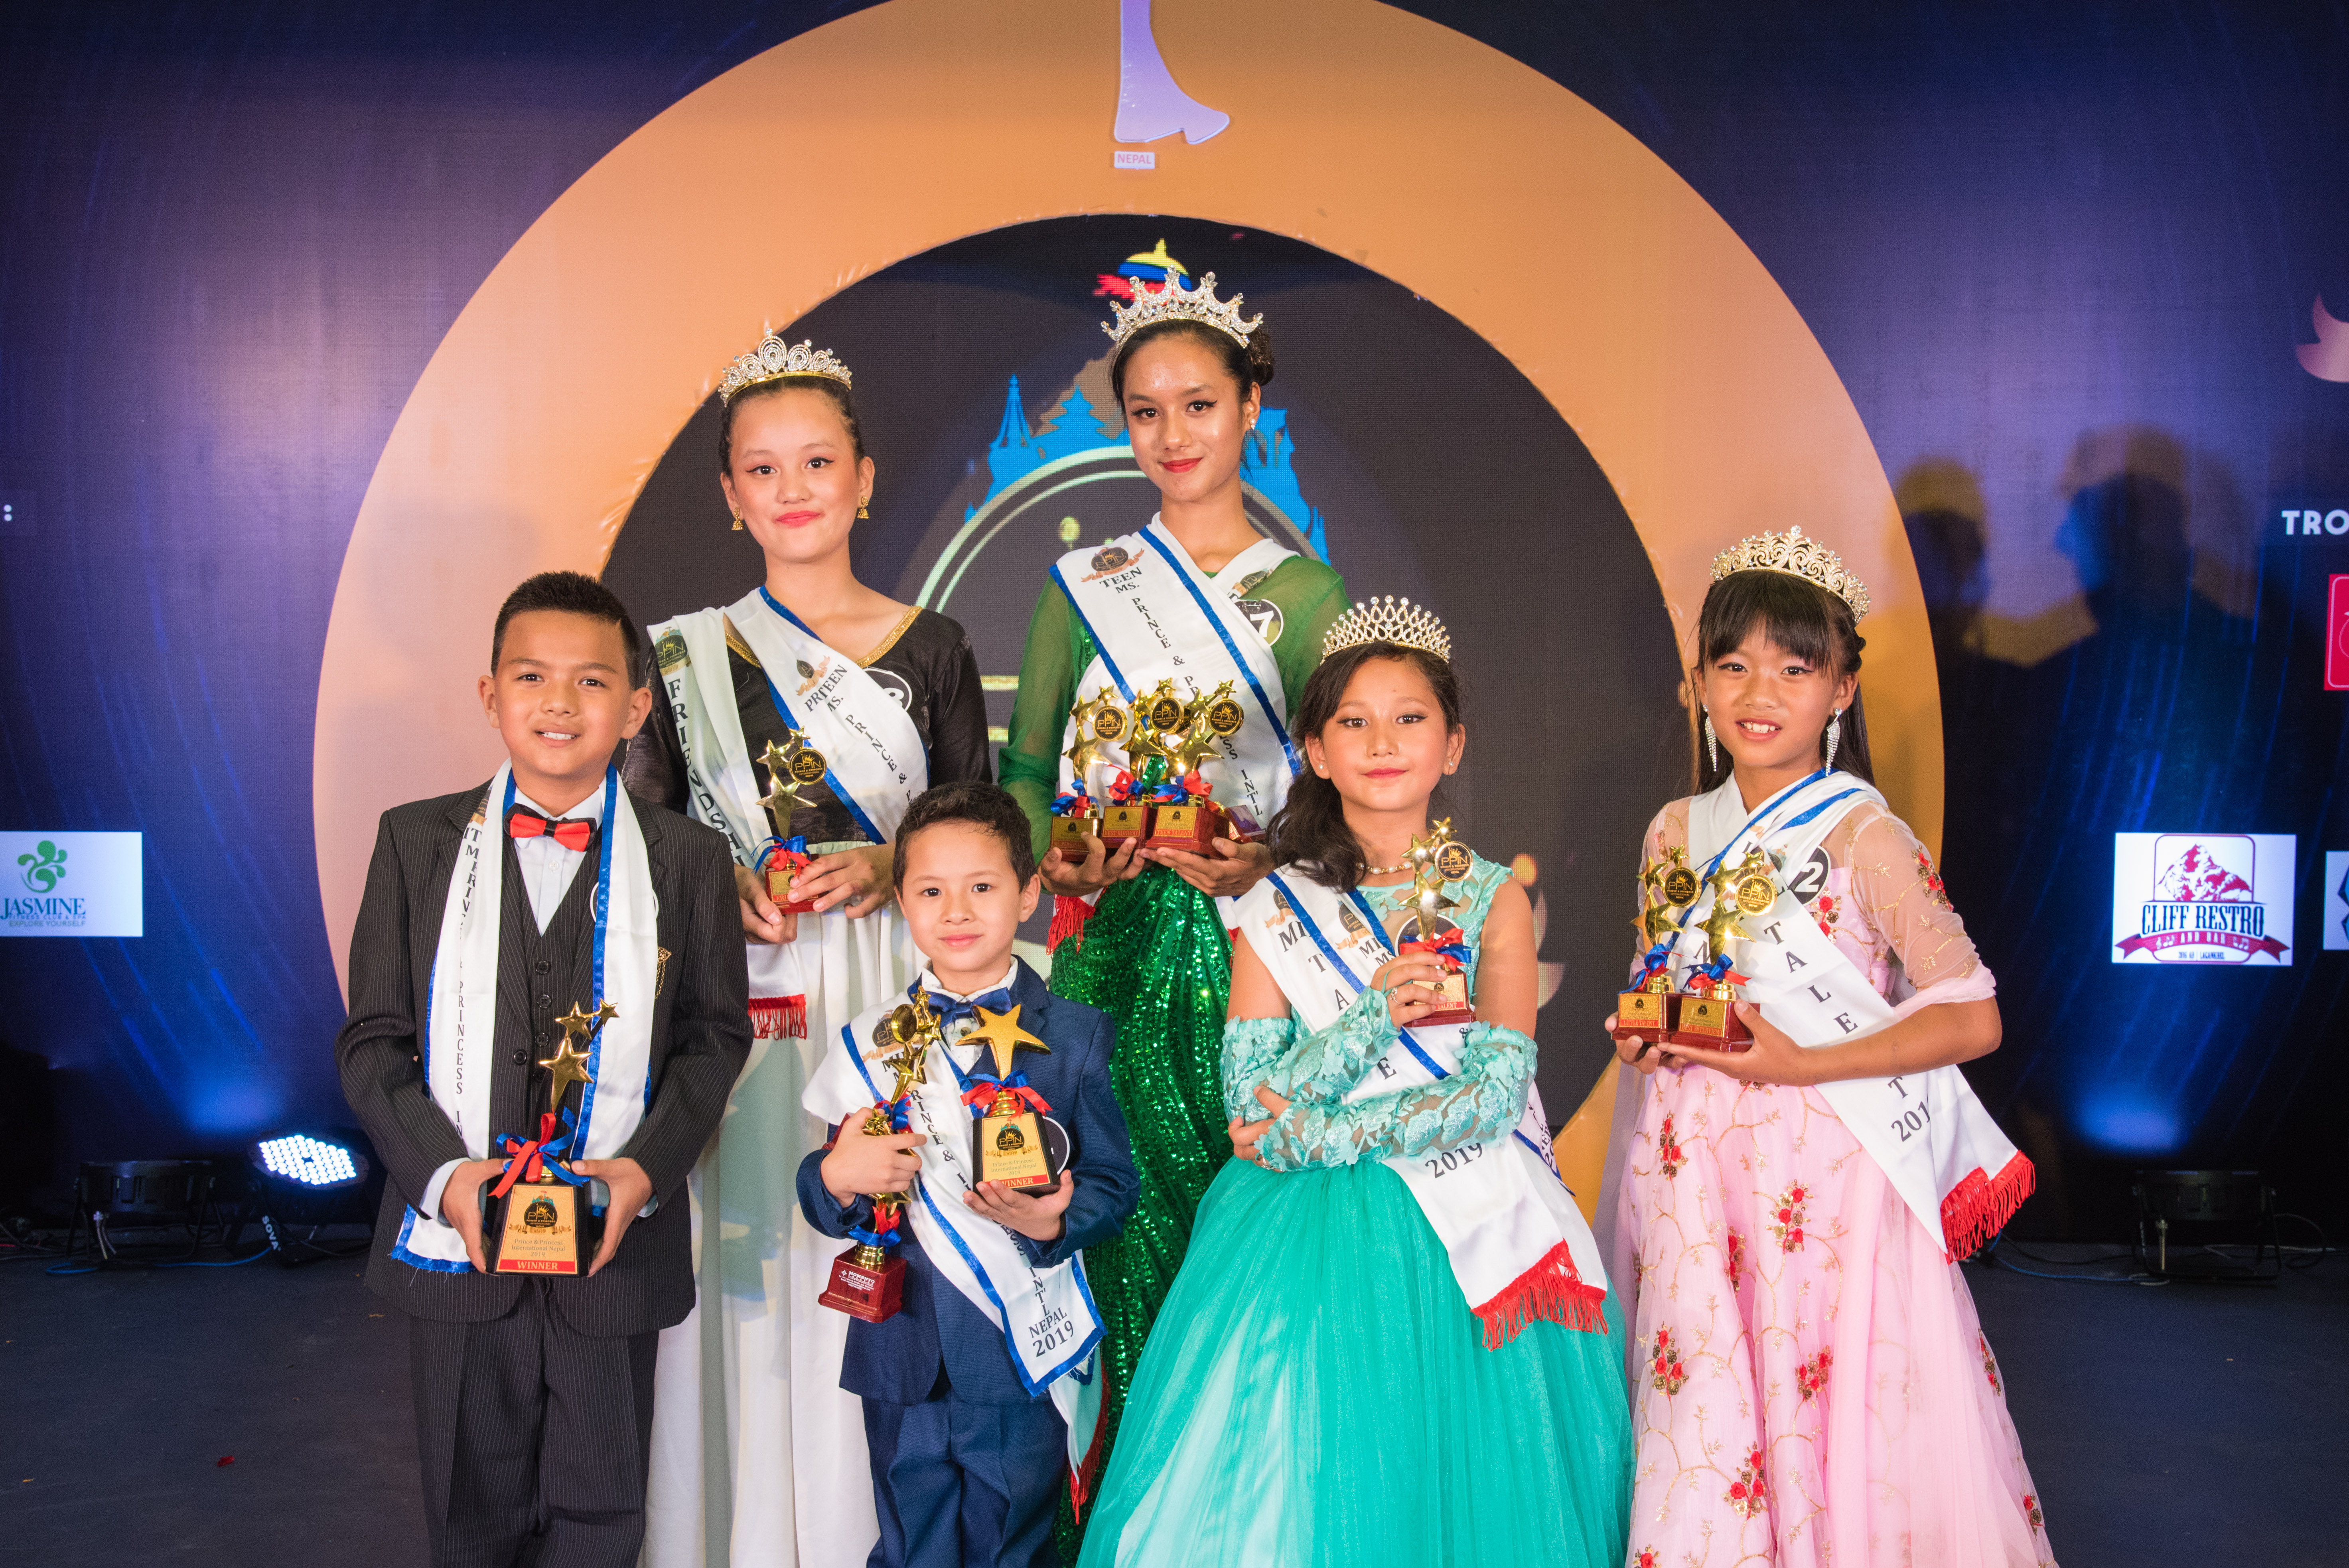 Prince and Princess International Nepal 2019 concludes